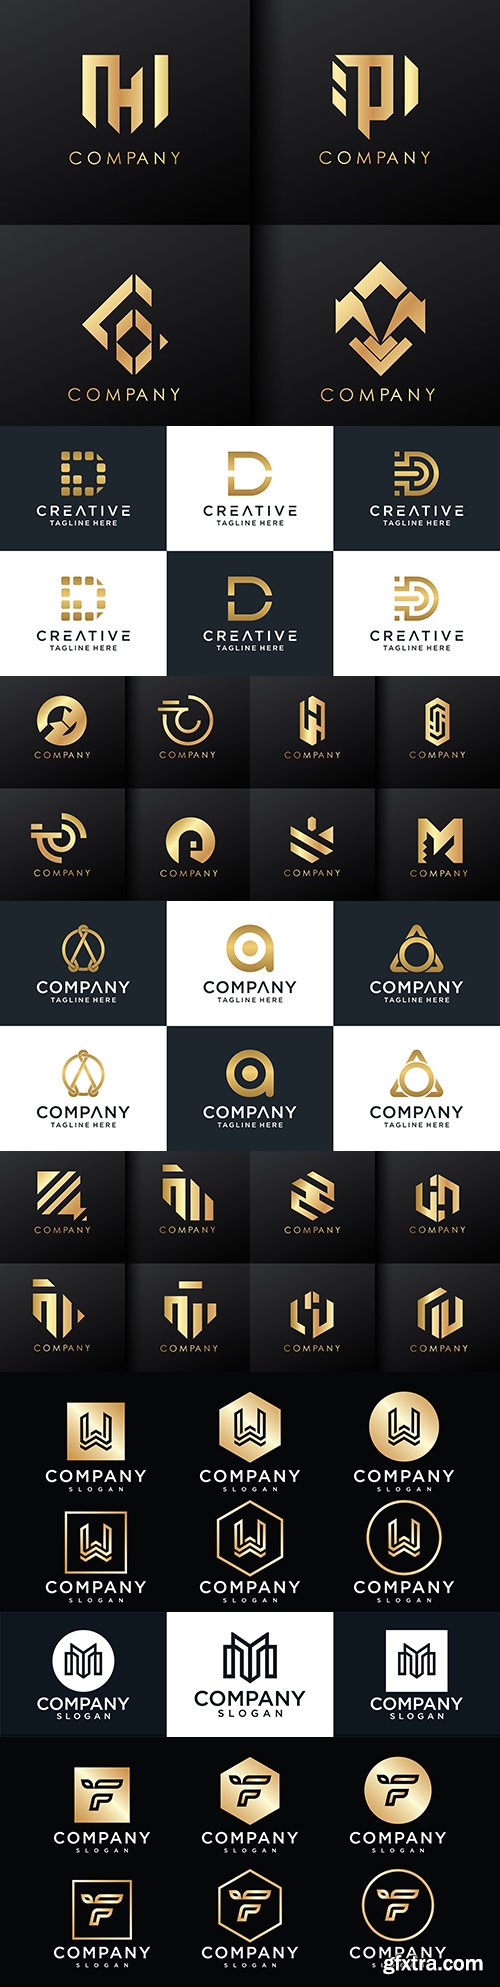 Brand name company business corporate logos design 20